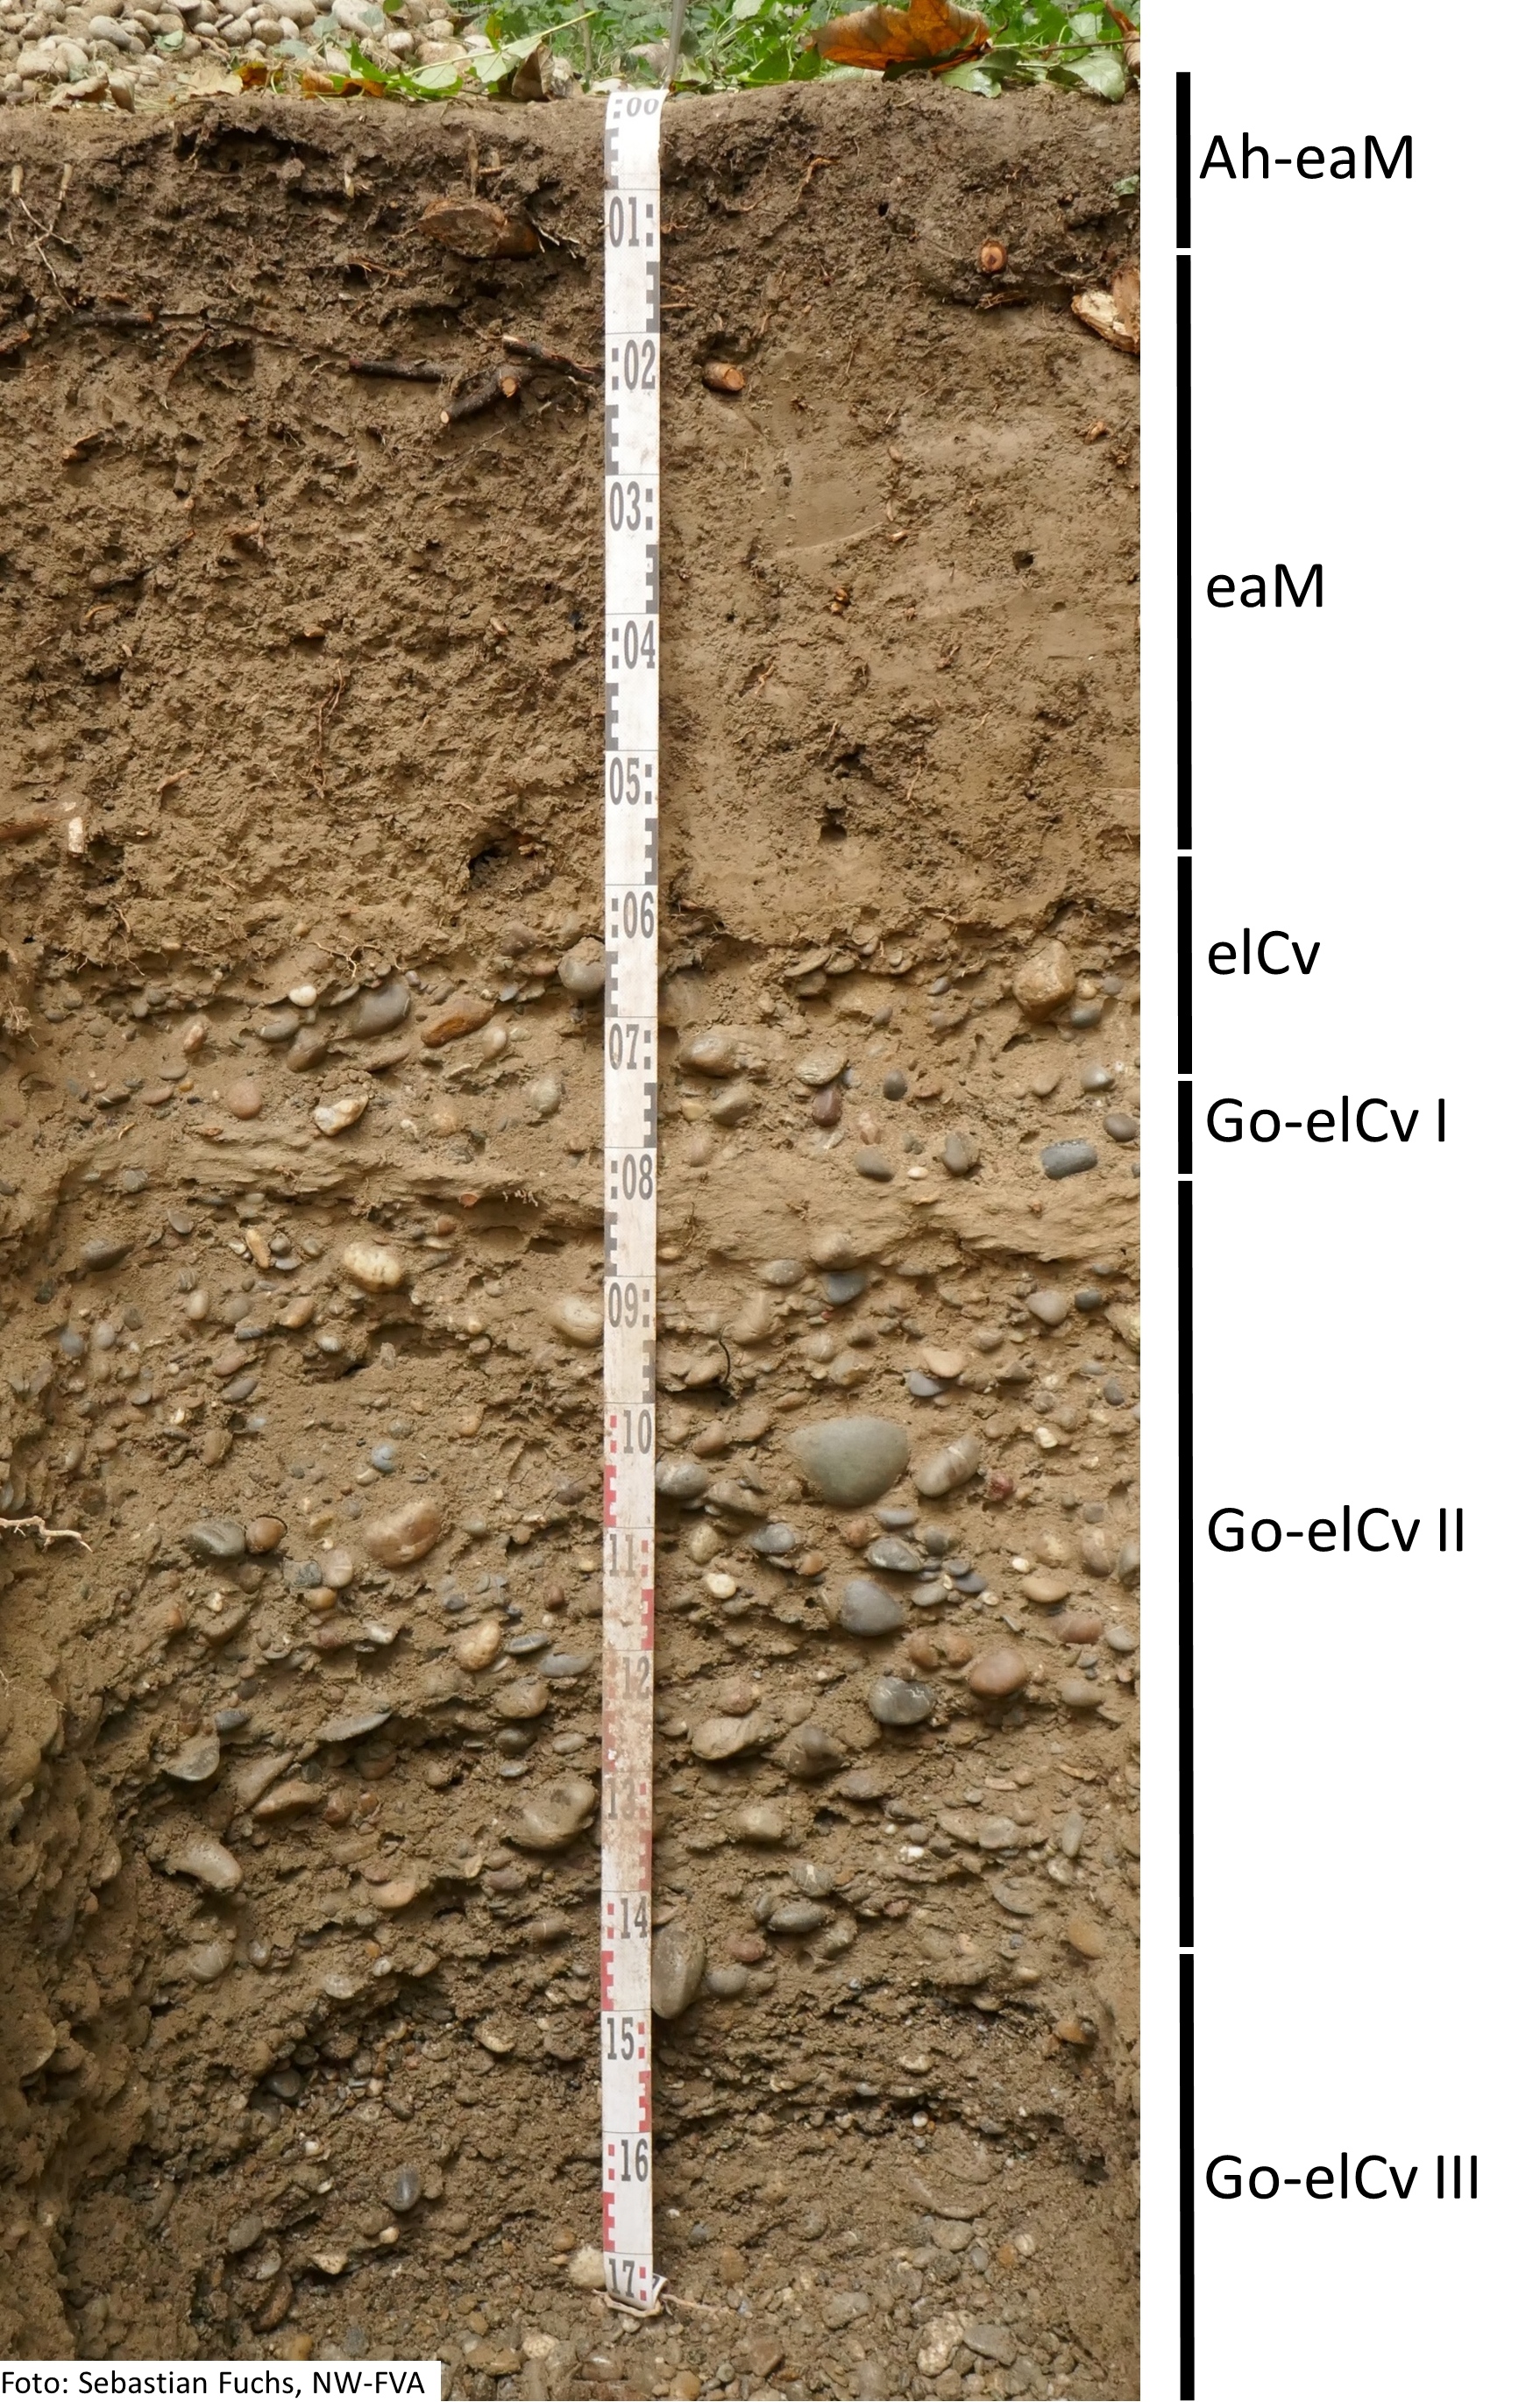 Das Foto zeigt einen senkrechten Schnitt durch den Boden der Untersuchungsfläche. Das Bodenprofil enthält folgende Bodenhorizonte: Ah-aM, aM, elCv, Go-elCv I, Go-elCv II, Go-elCv III